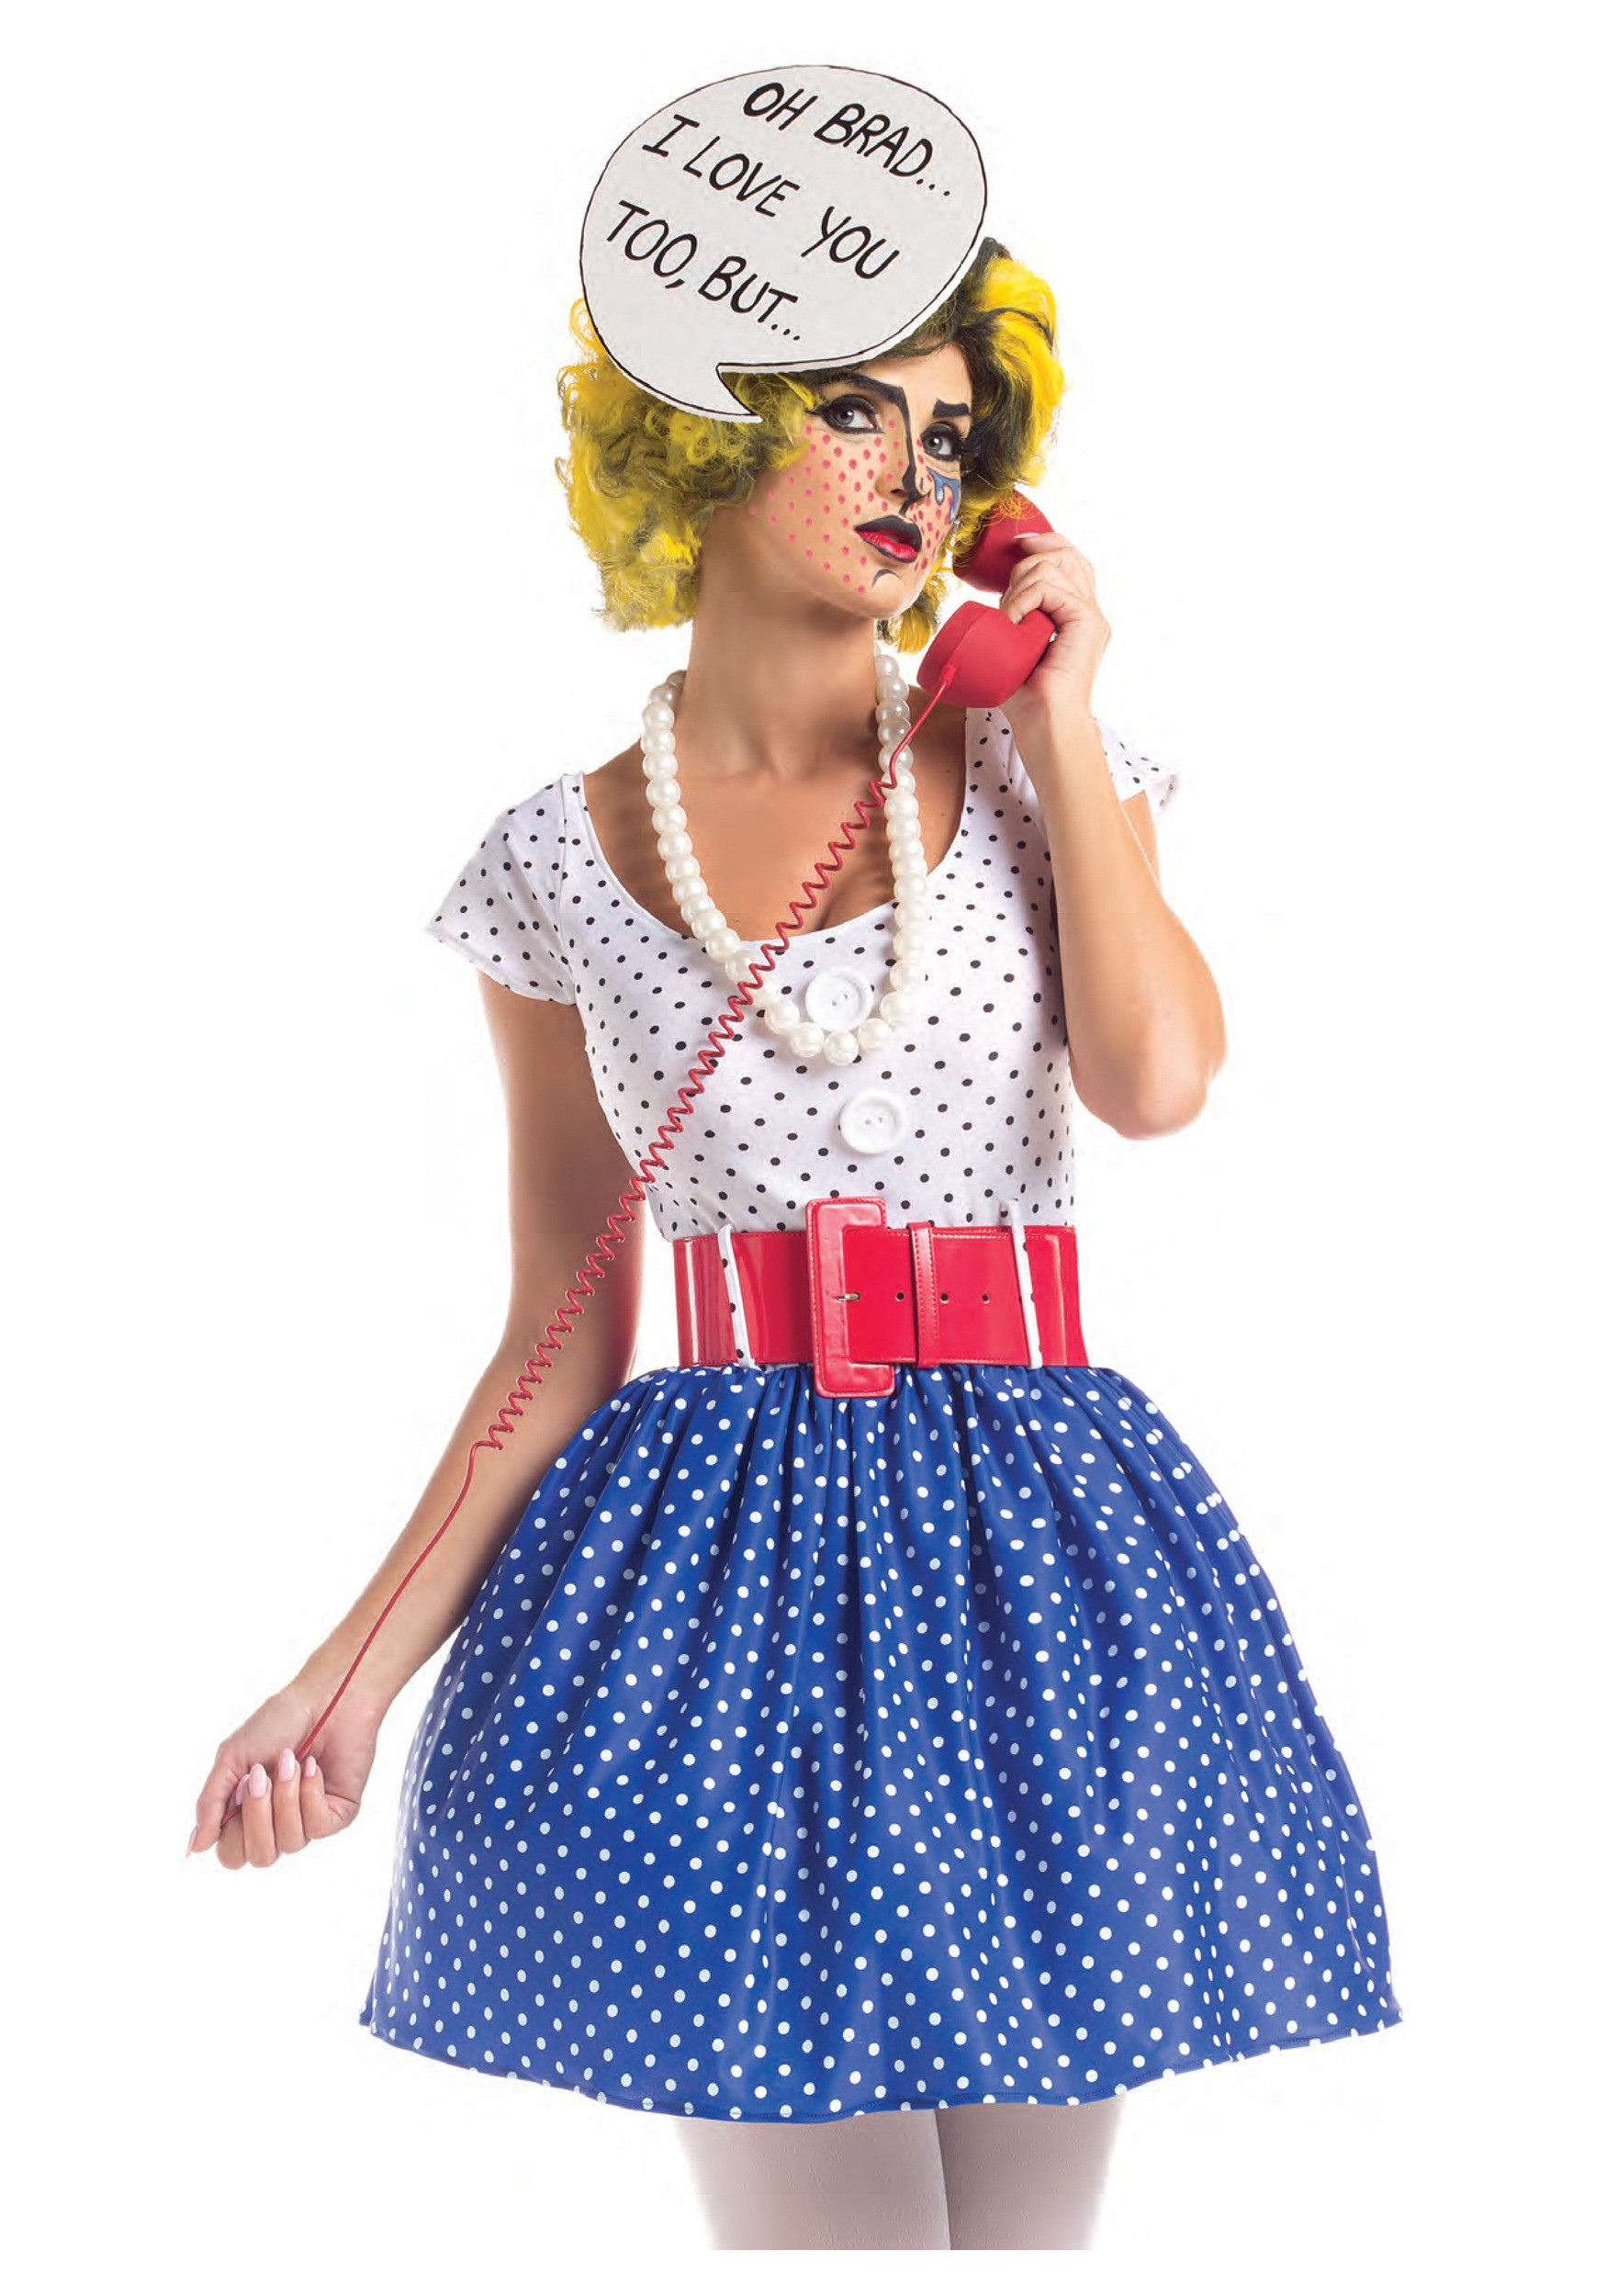 Best ideas about Pop Art Costume DIY
. Save or Pin Adult Pop Art Cutie Costume Now.